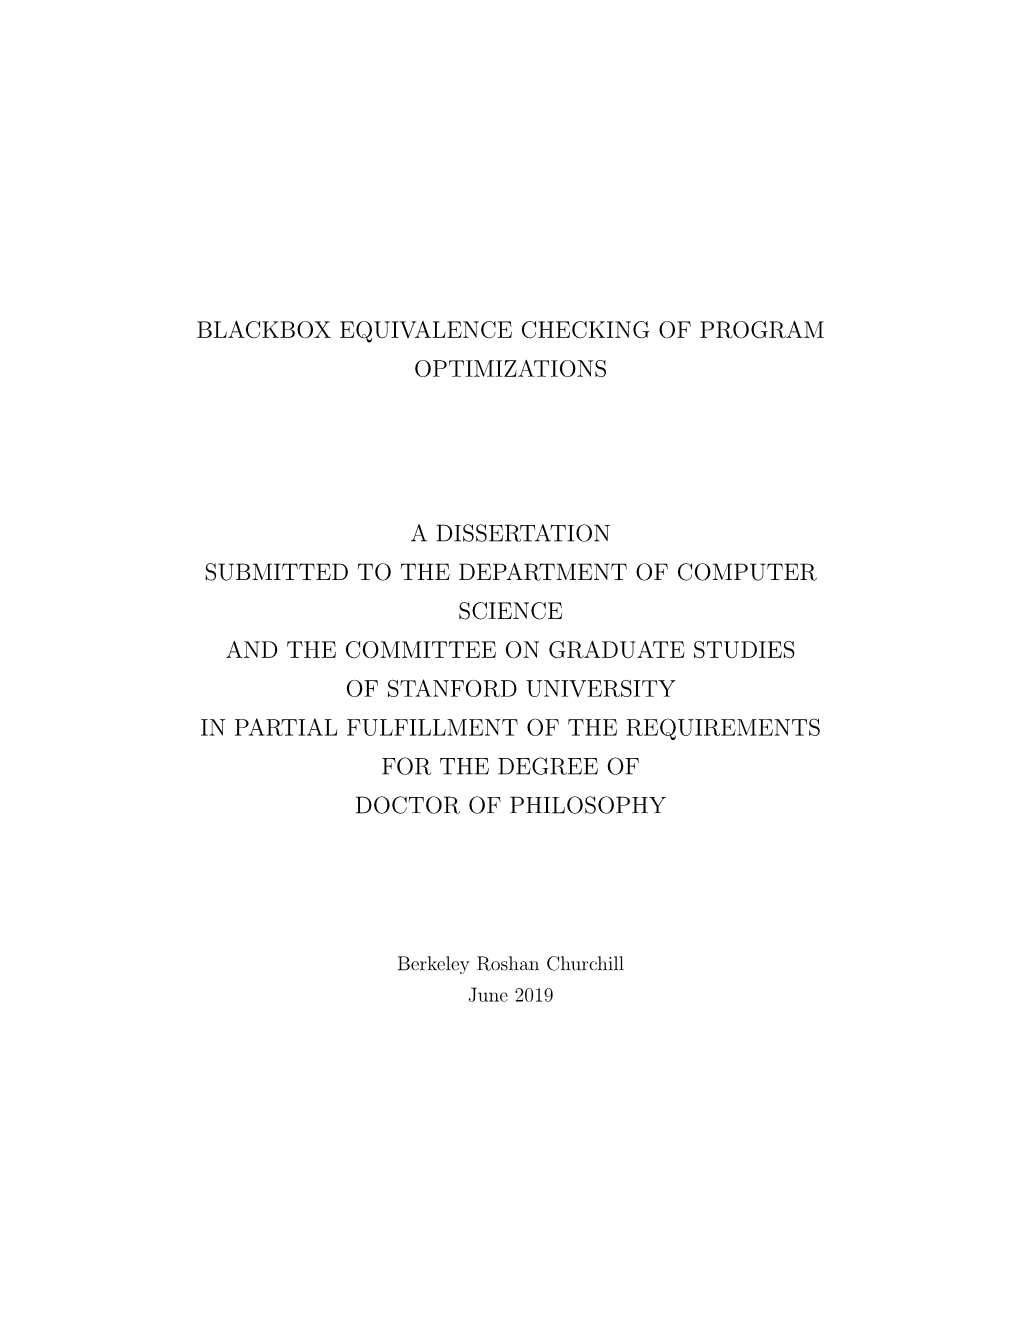 Blackox Equivalence Checking of Program Optimizations